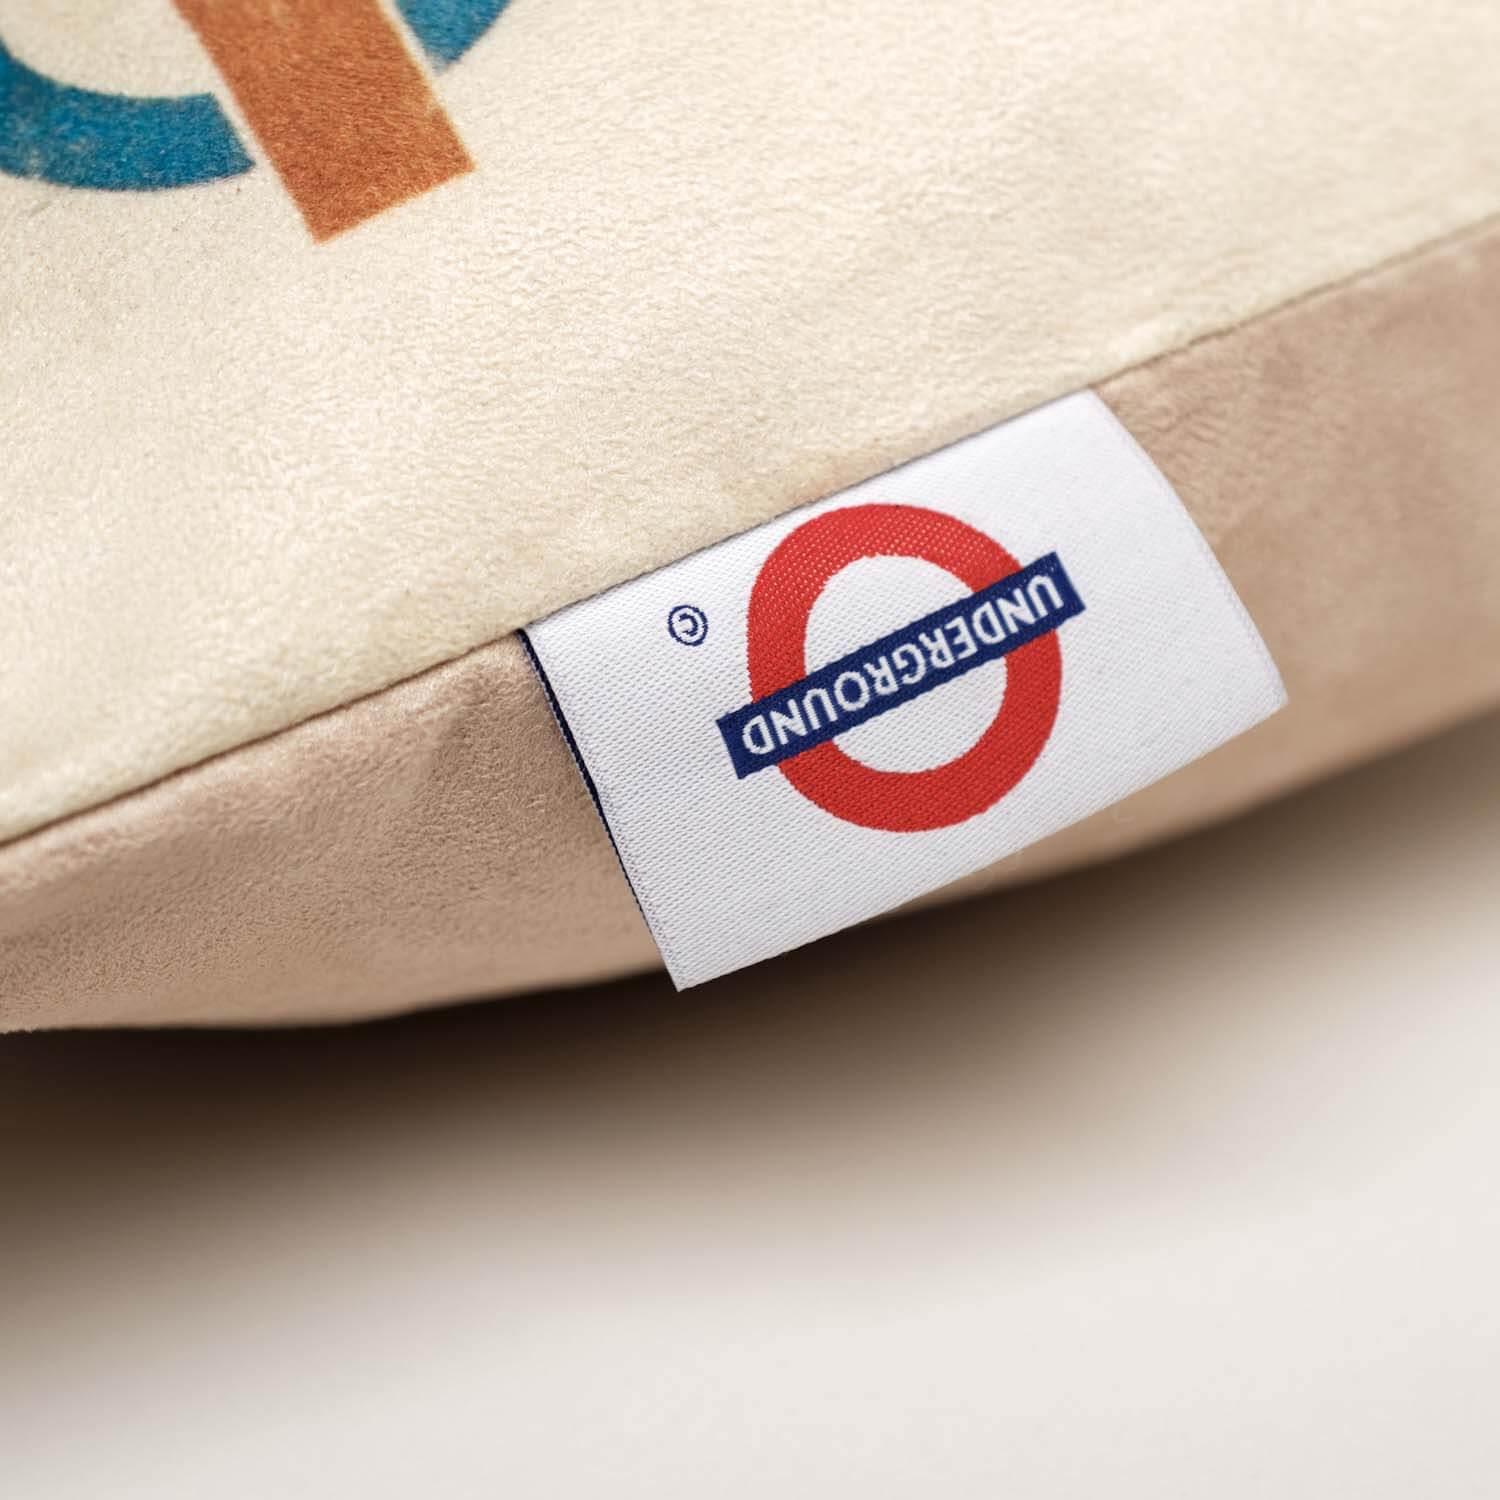 Tube Map Zone One - Art Print Cushion - Handmade Cushions UK - WeLoveCushions